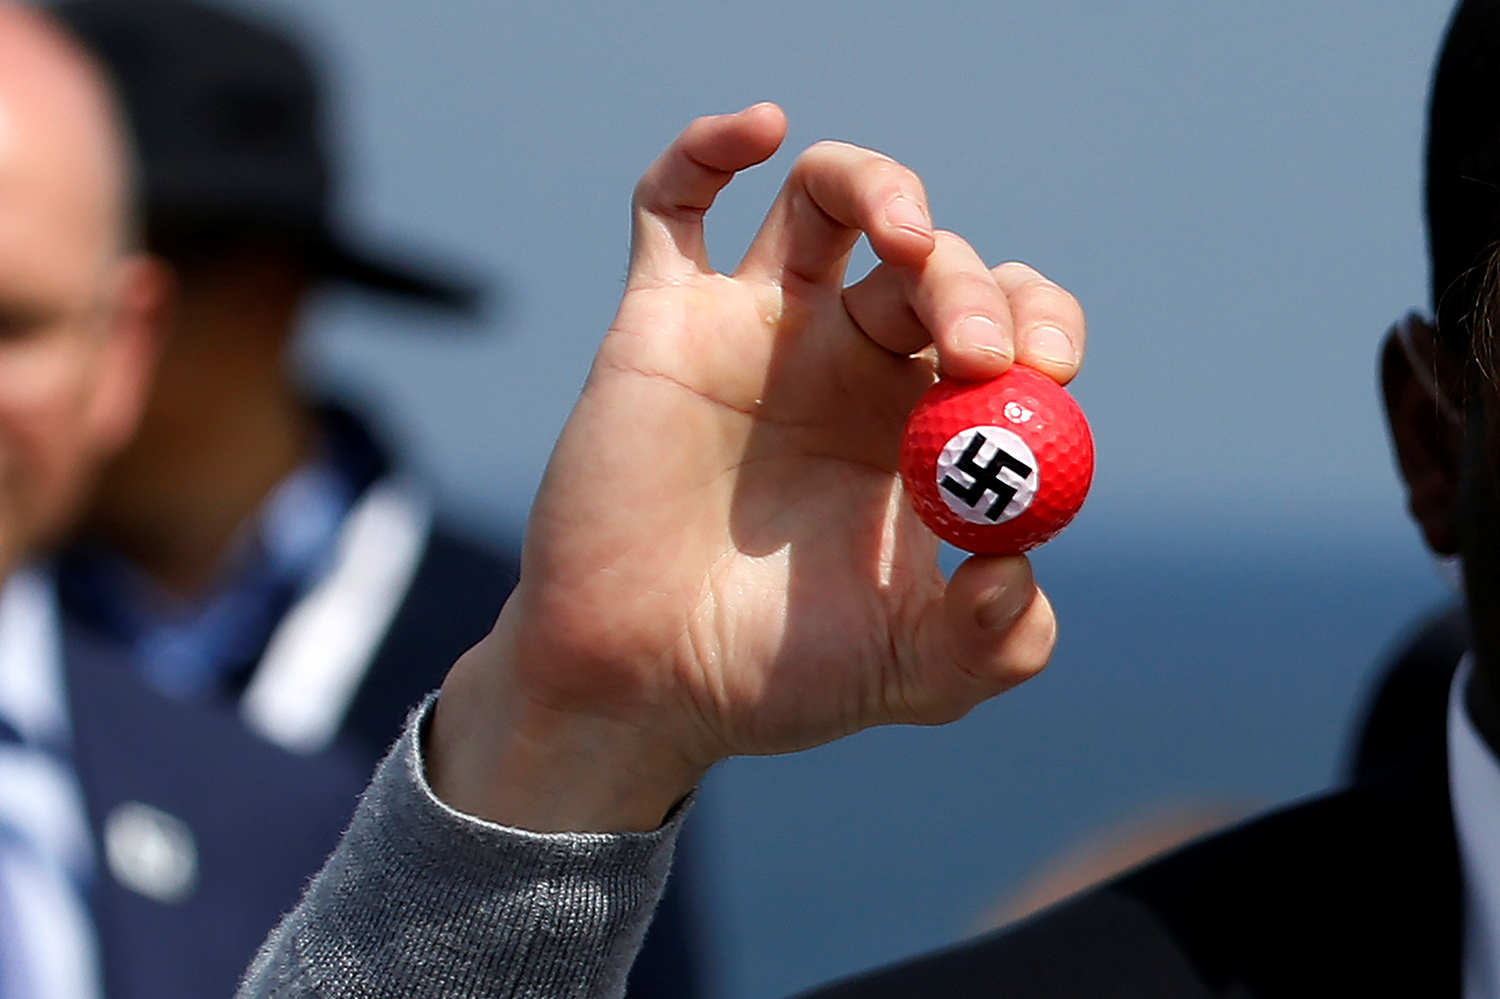 Simpatizantes nazis usan Twitter con “relativa impunidad”